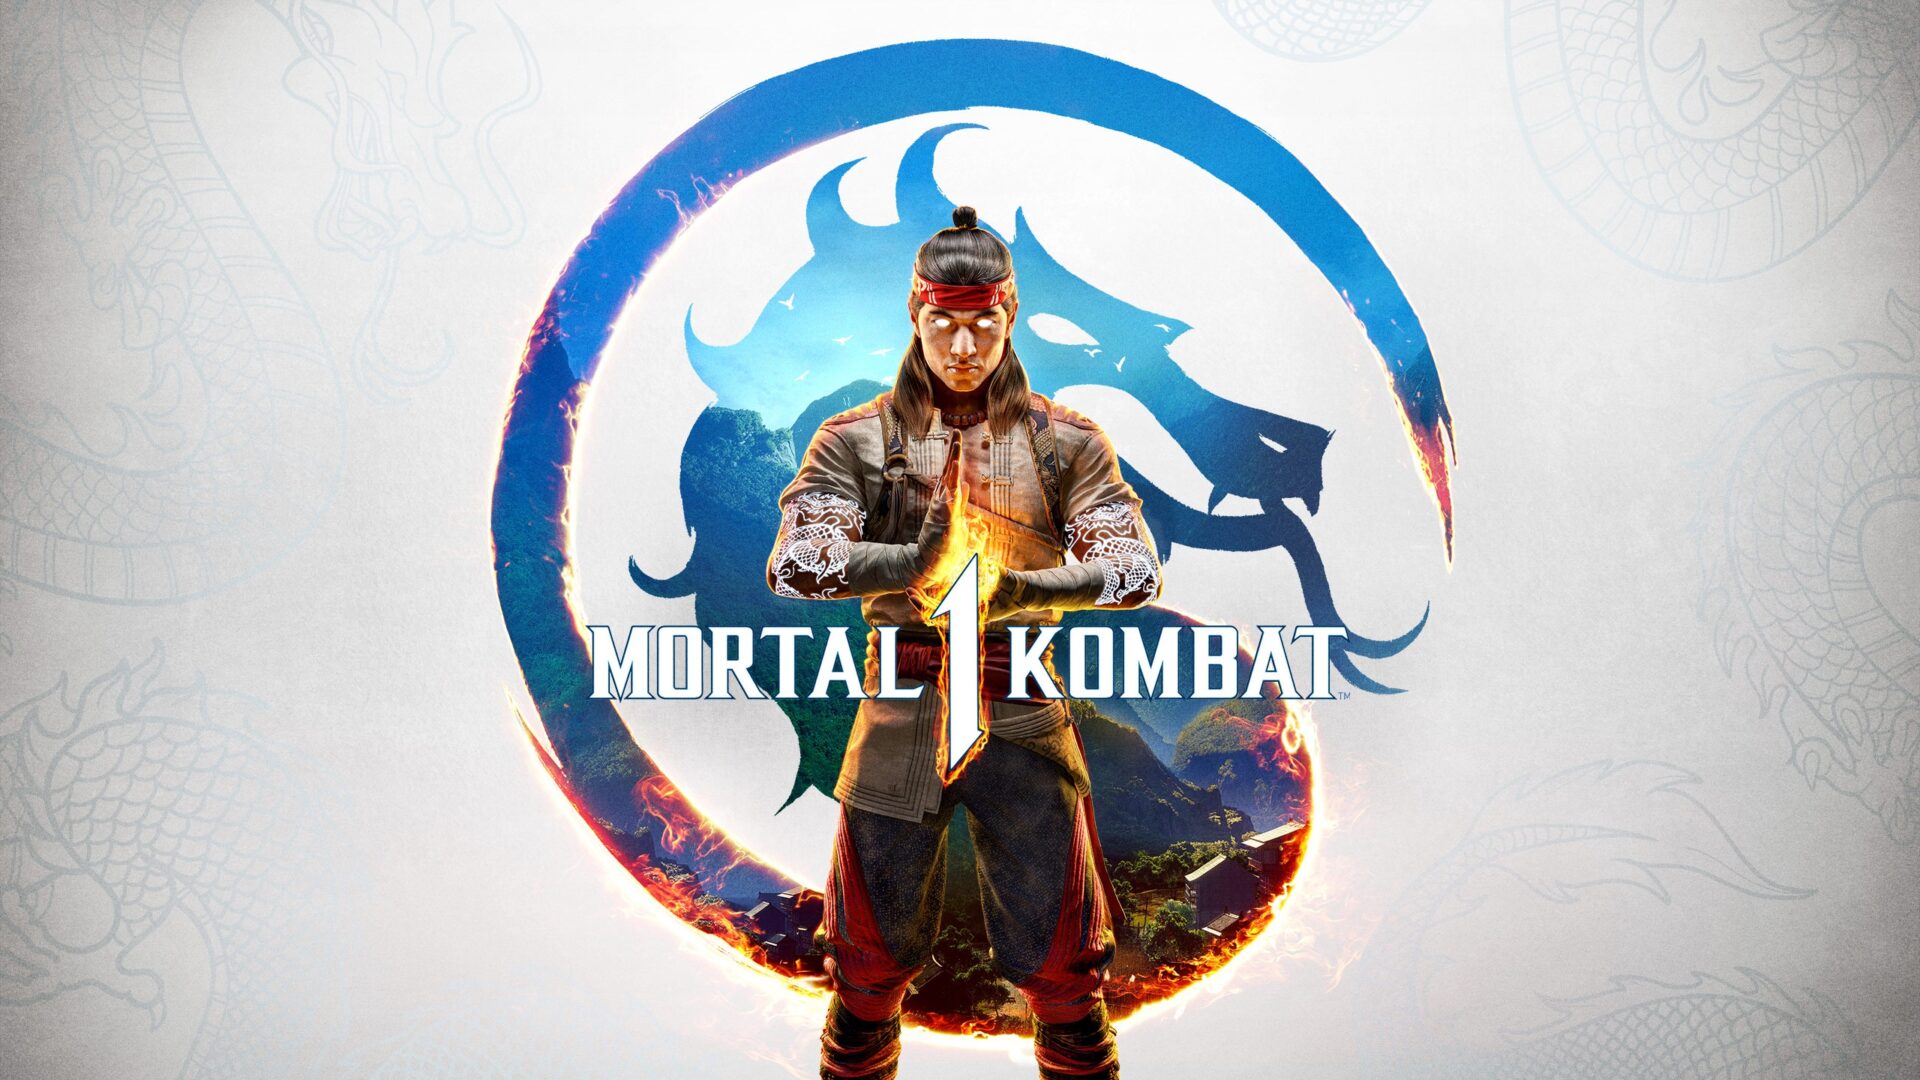 Mortal Kombat takes place in September